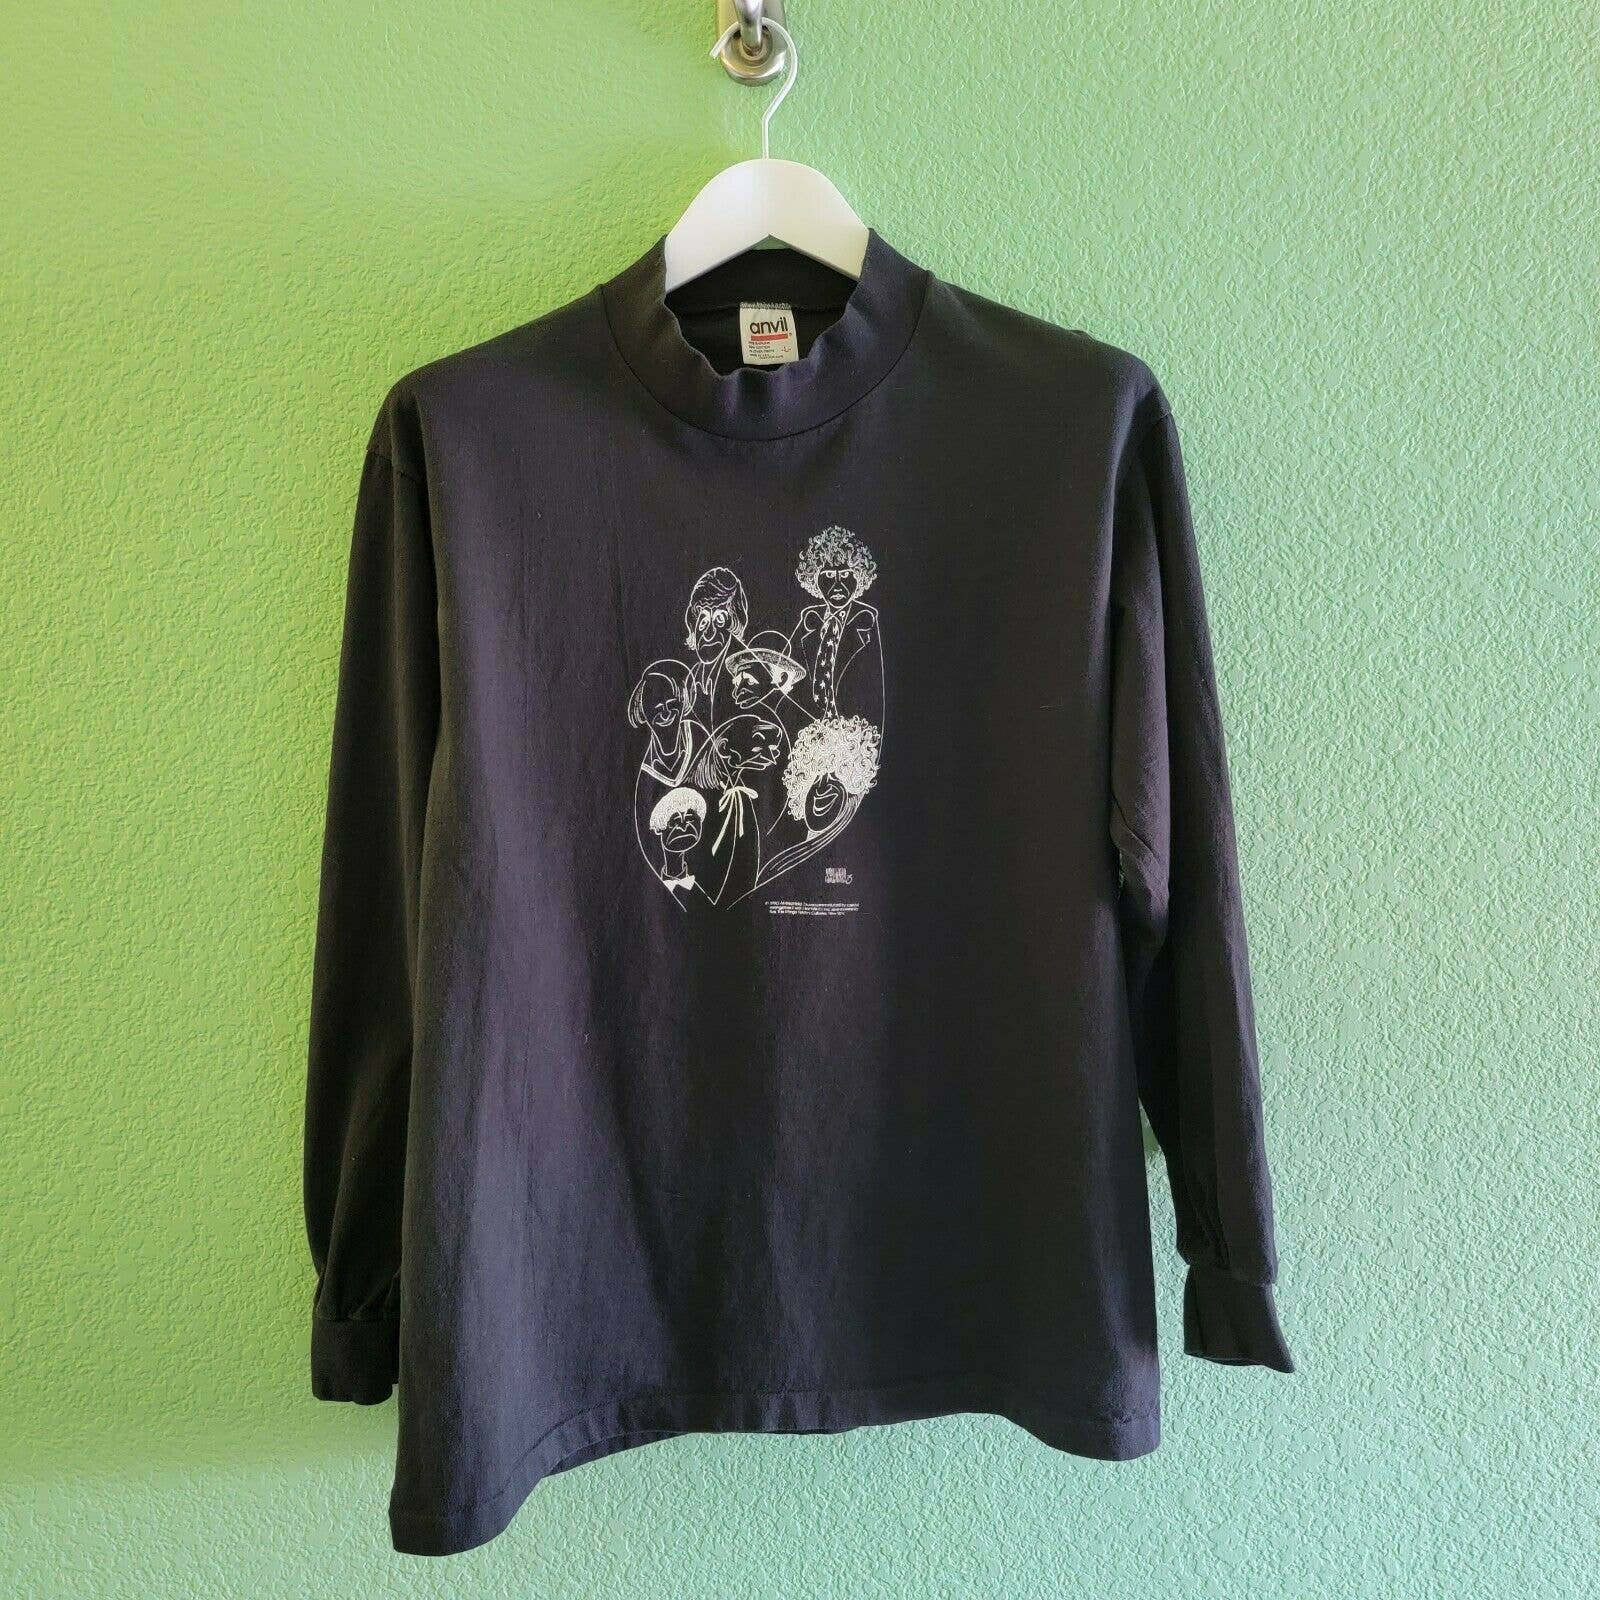 Vintage Al Hirschfeld Dr Who Band T-Shirt 90s Single Stitch Kleding Herenkleding Overhemden & T-shirts T-shirts T-shirts met print 